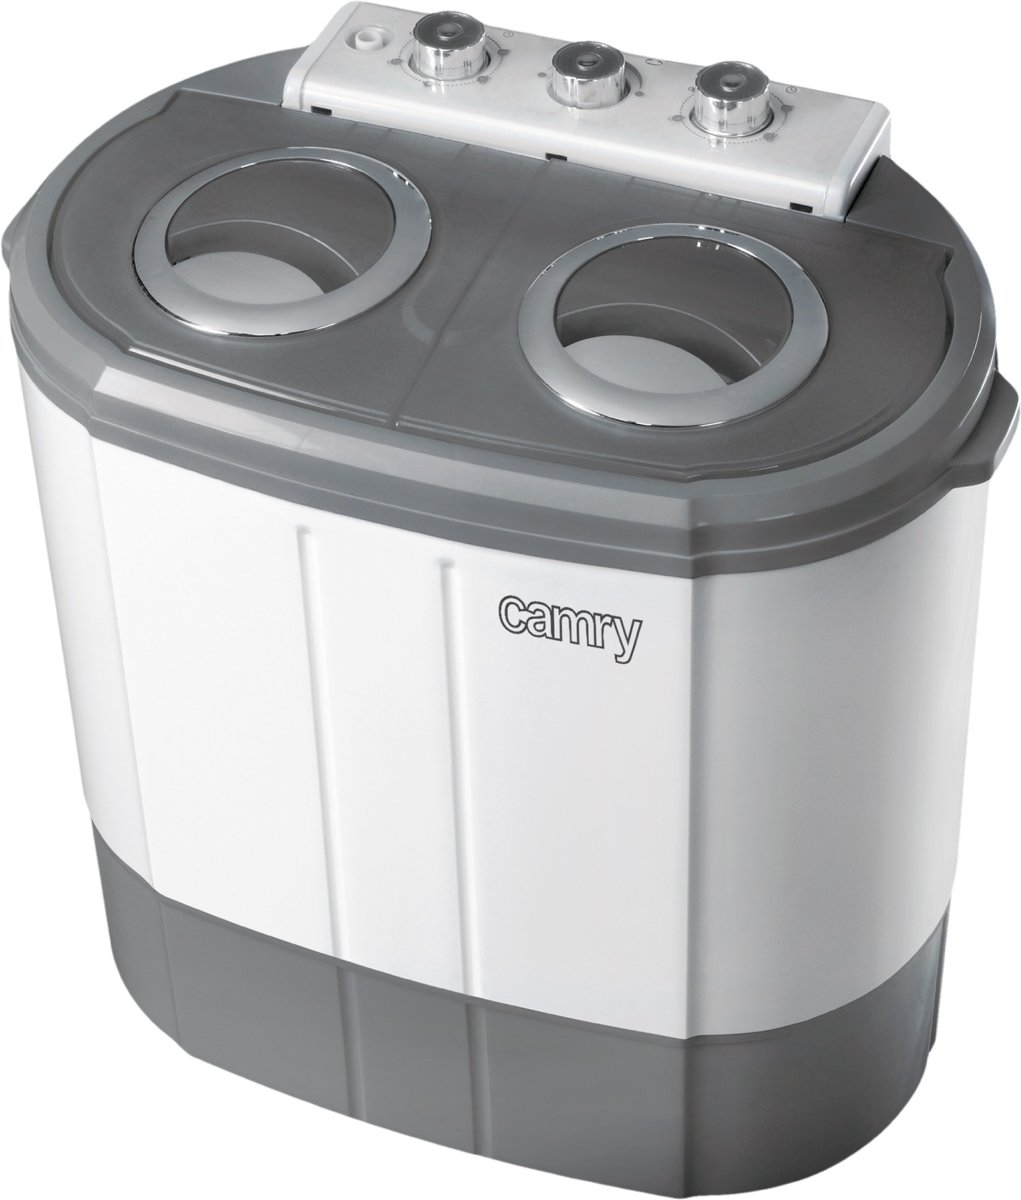 Camry CR 8052 - Mini wasmachine